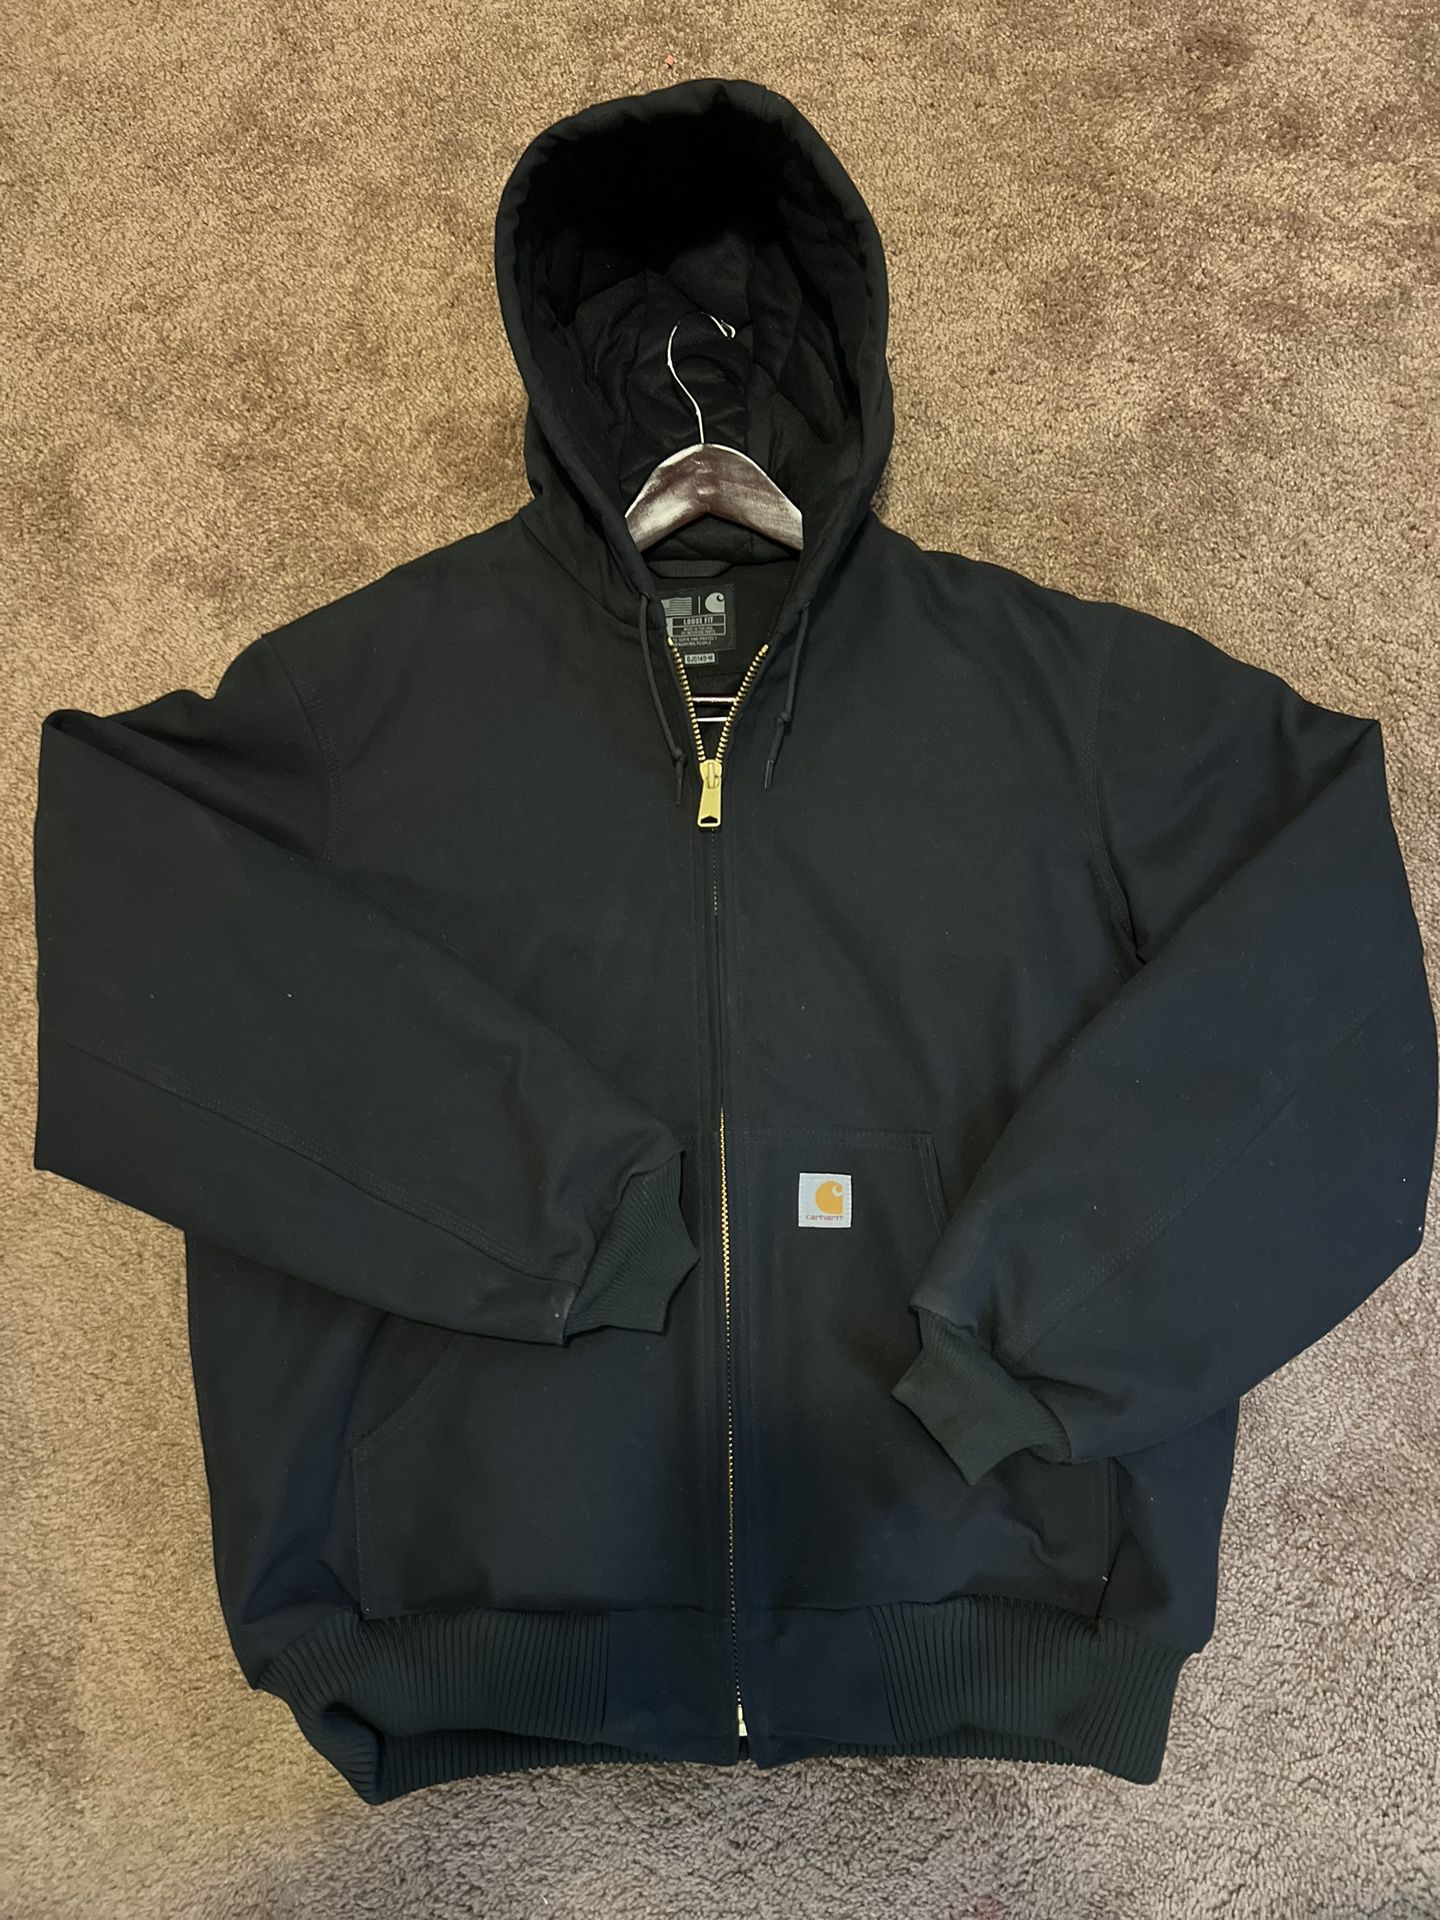 Black Carhartt Jacket for Sale in Yuma, AZ - OfferUp